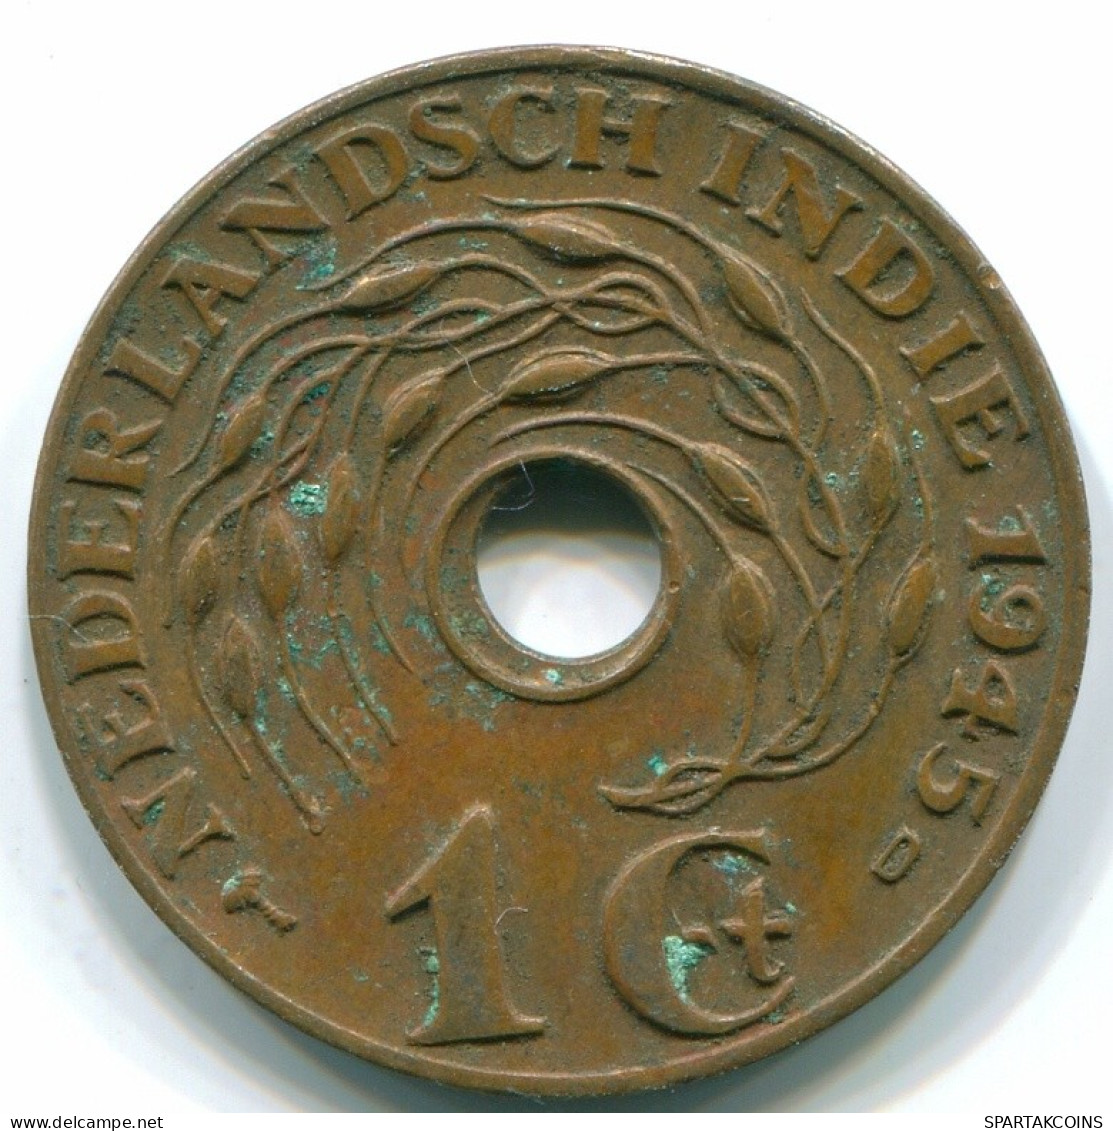 1 CENT 1945 D NIEDERLANDE OSTINDIEN INDONESISCH Koloniale Münze #S10383.D.A - Dutch East Indies